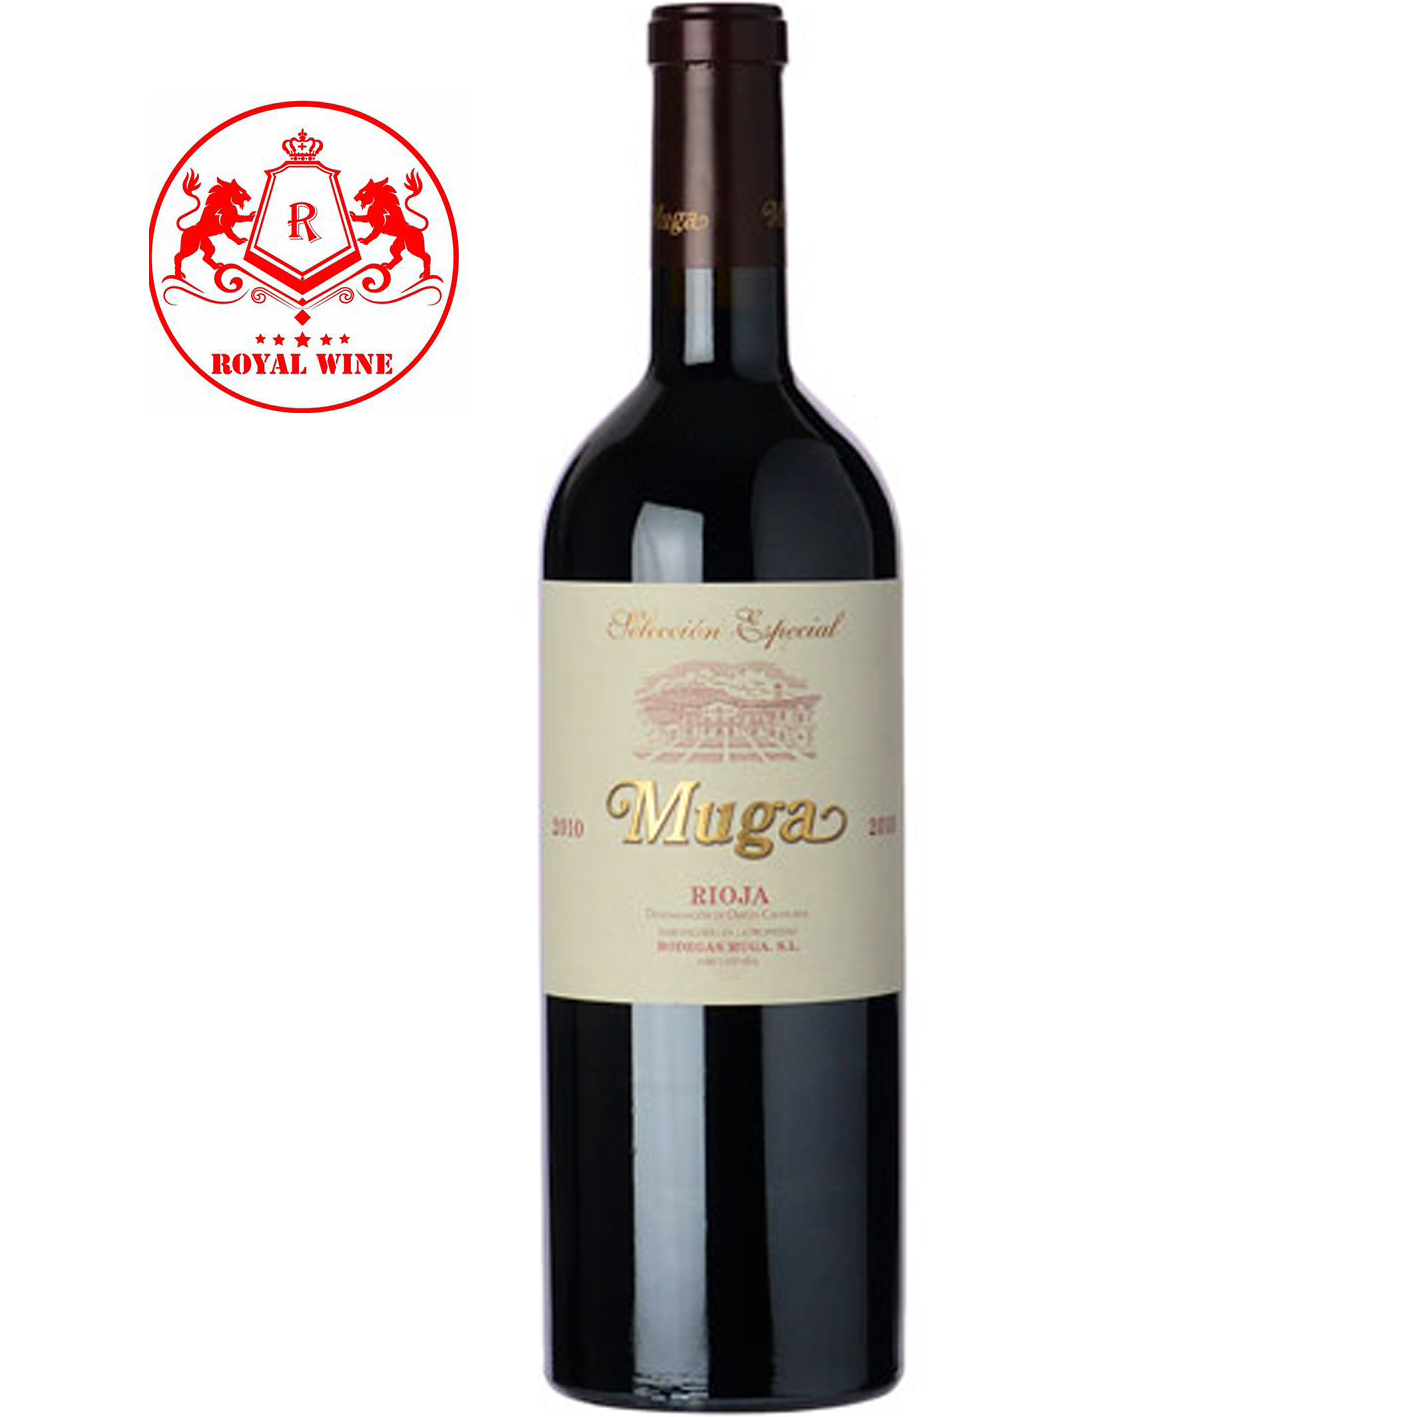 MUGA Selection Especial Rioja